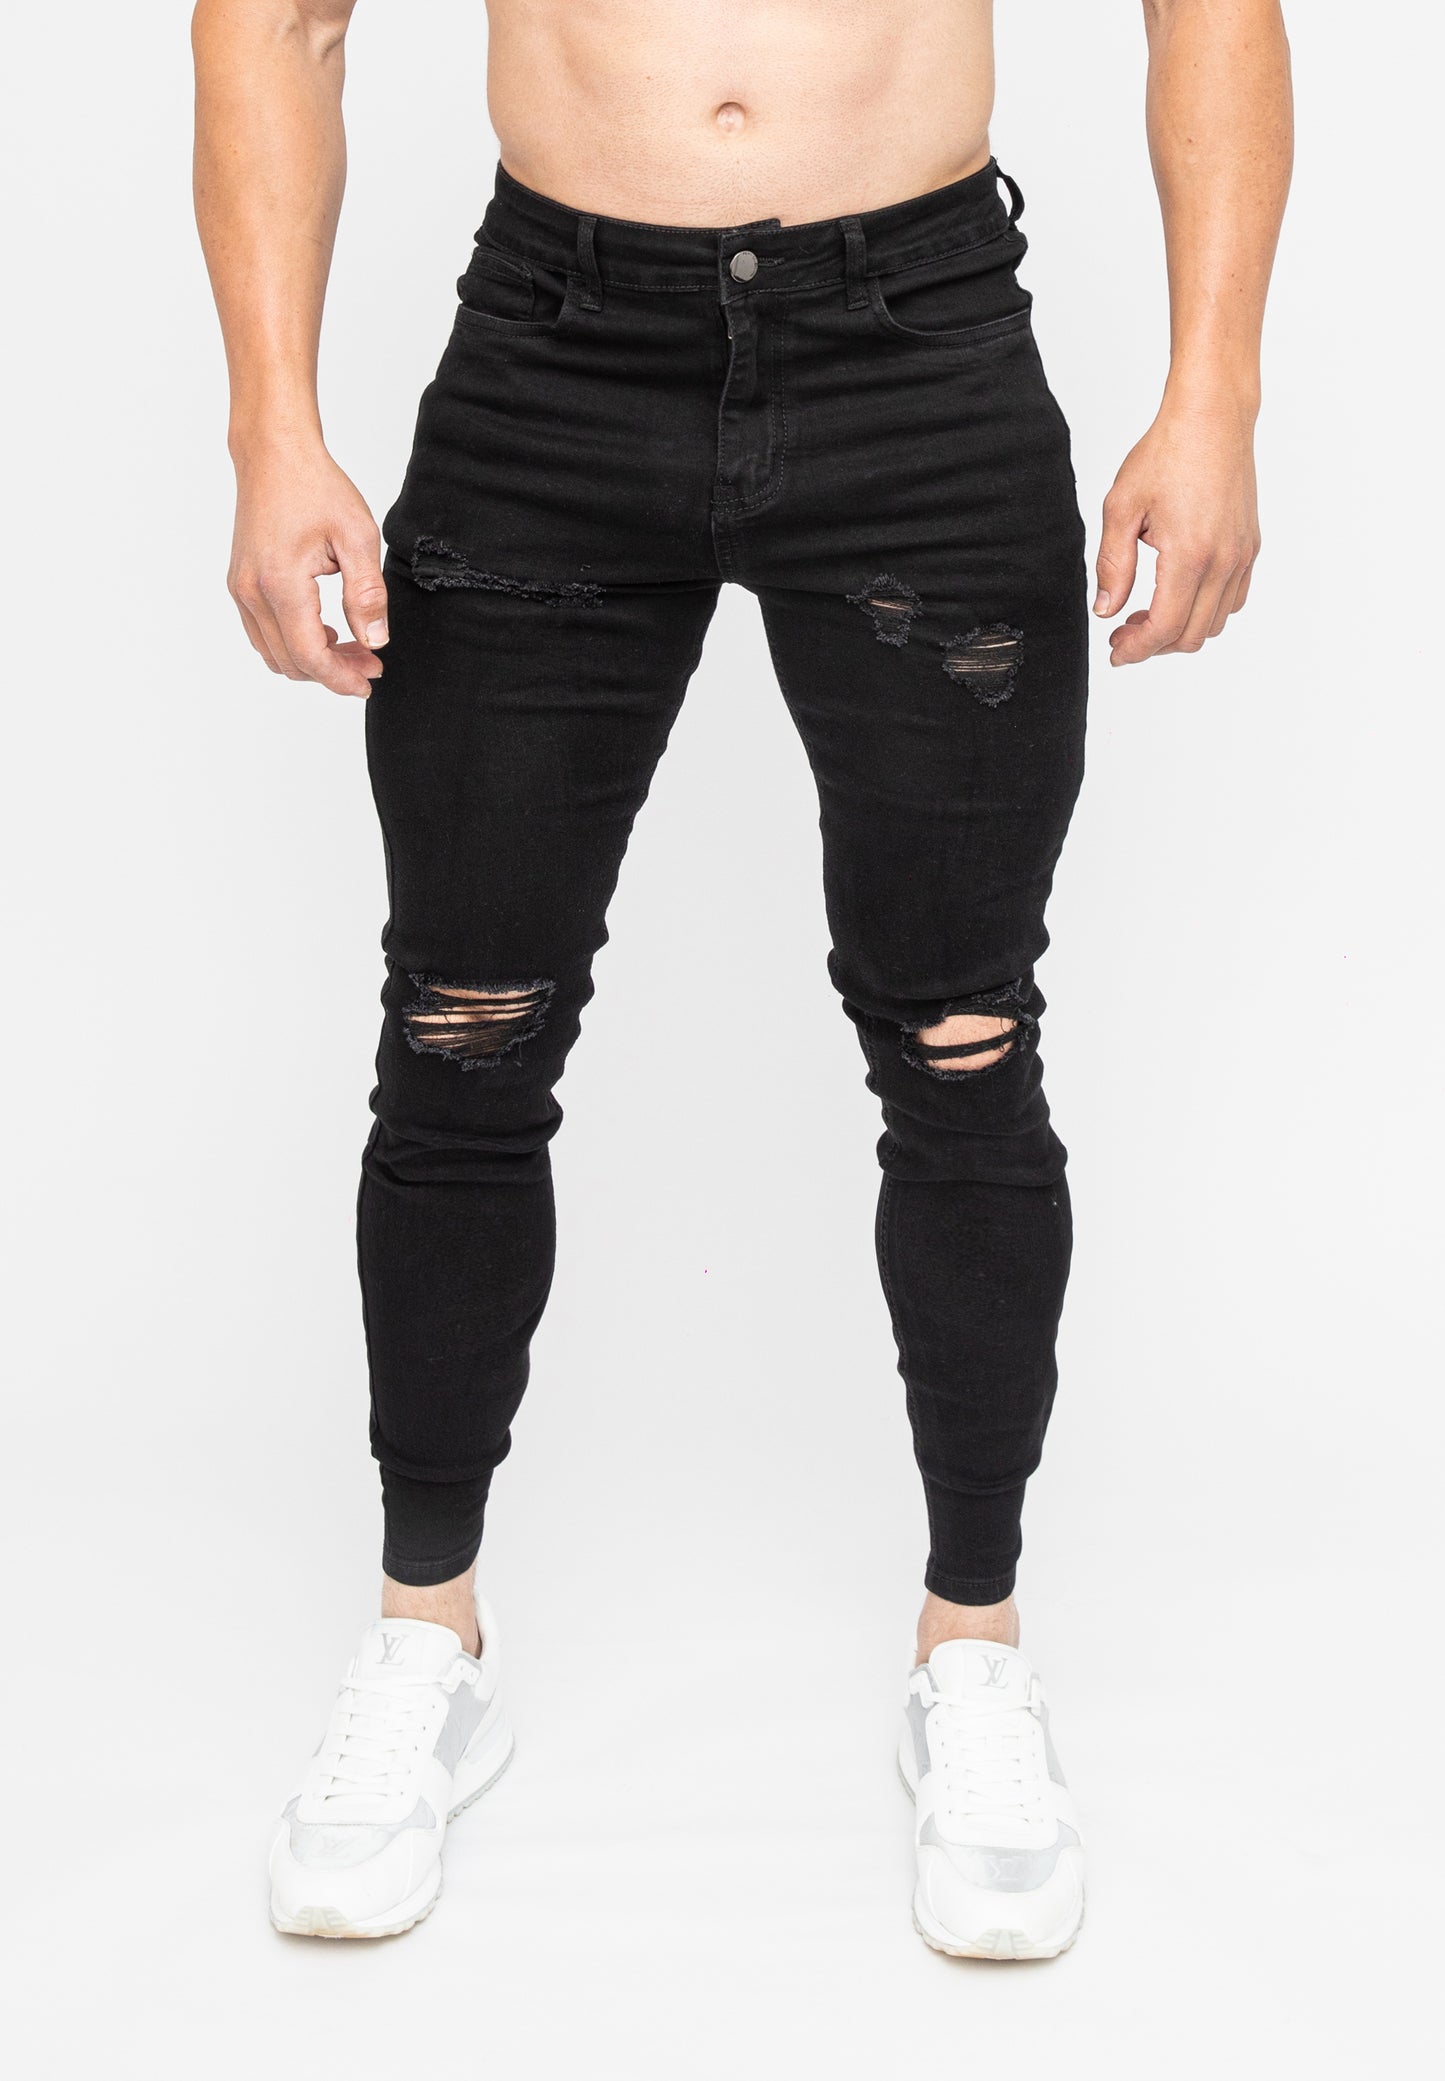 Men's Black Ripped Skinny Fit Stretch Jeans Denim Pants Front